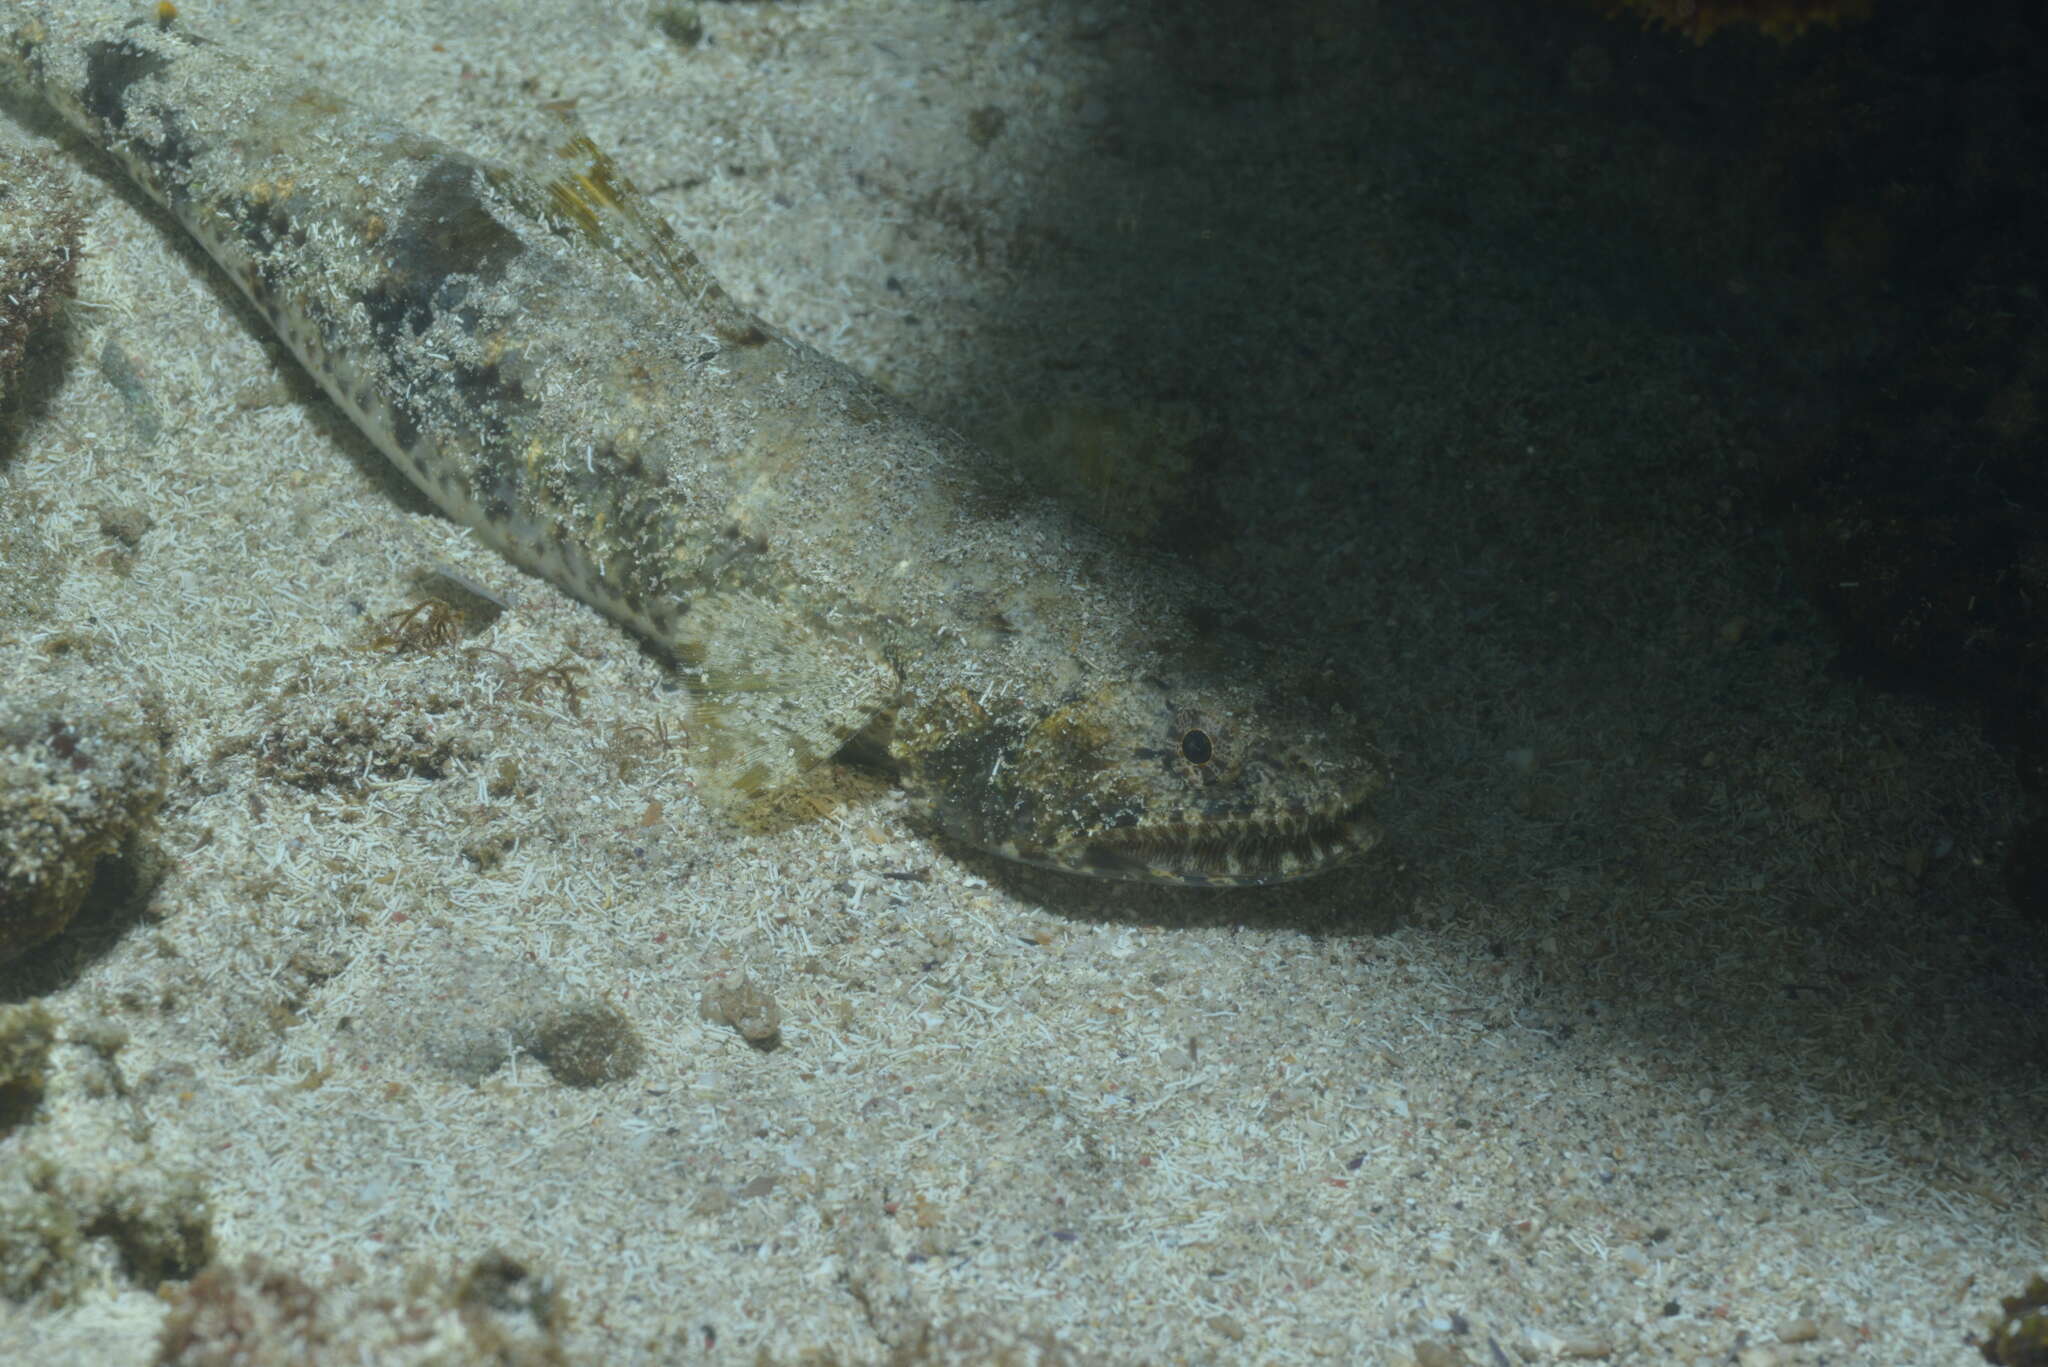 Image of Gracile lizardfish